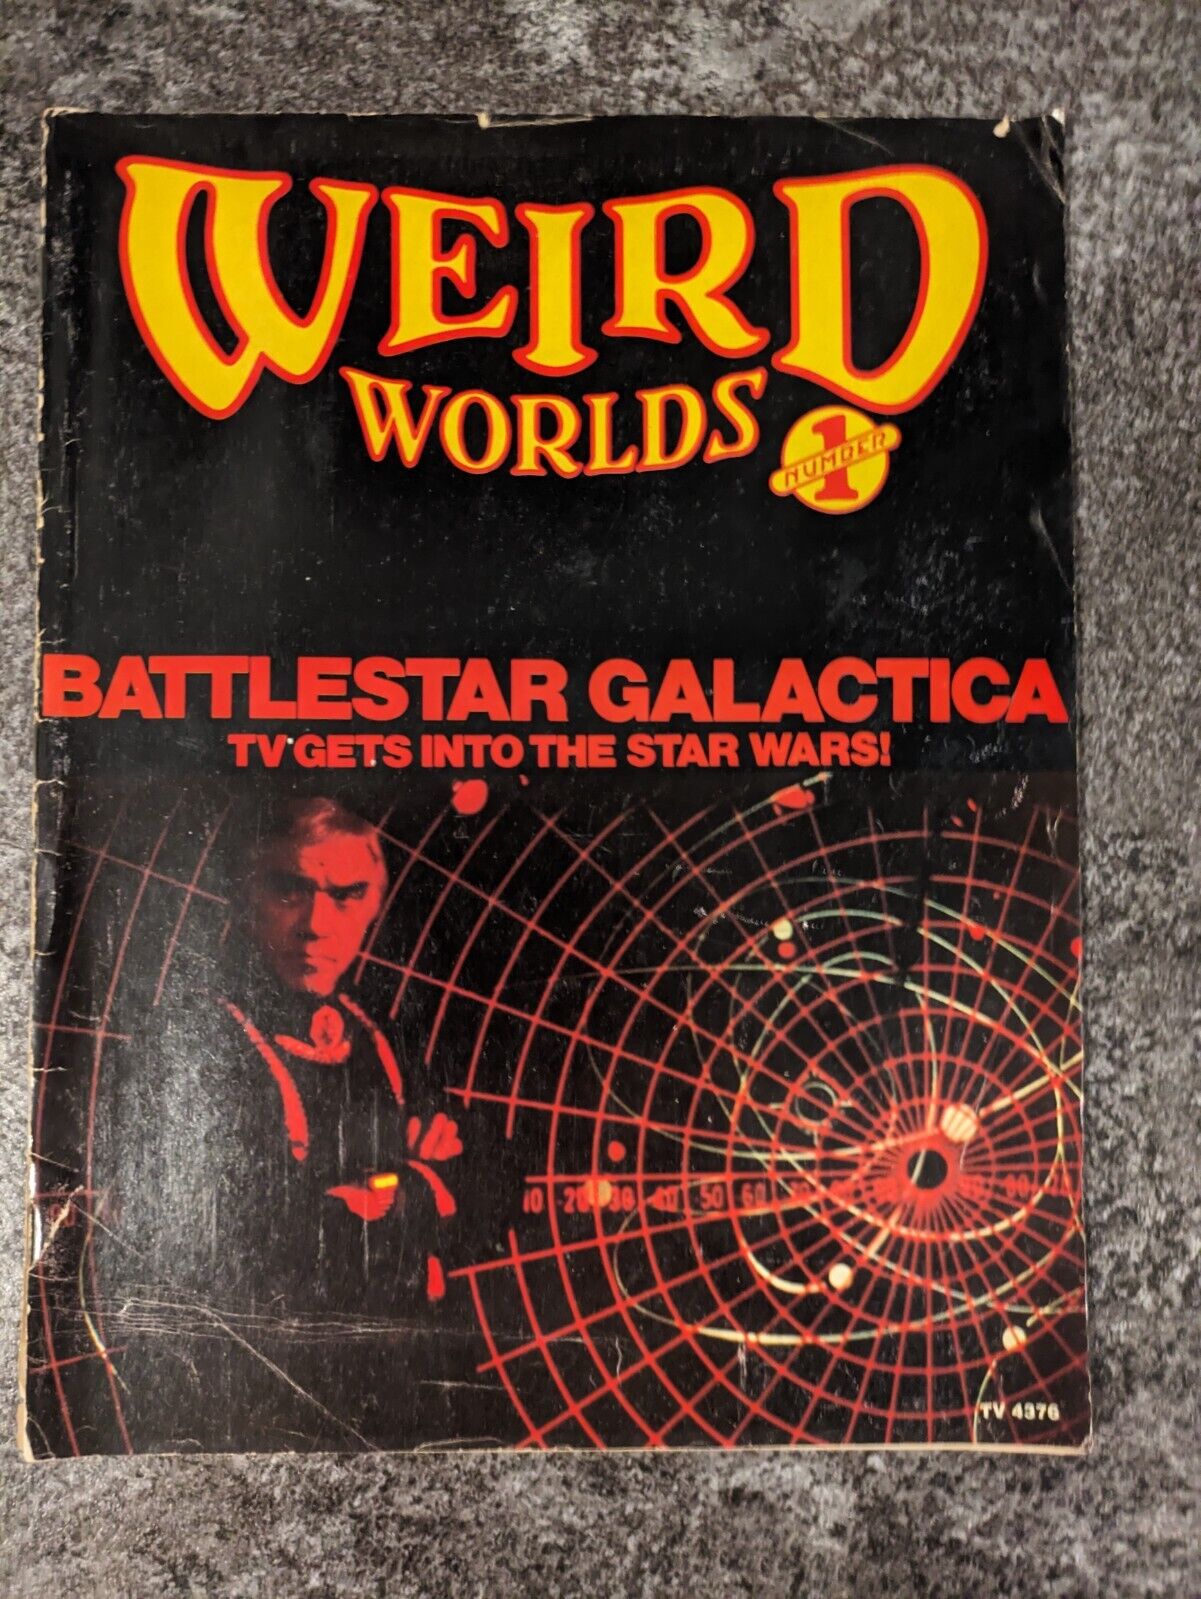 Weird Worlds #1 1978 Battlestar Galactica / Frank Frazetta Full Color Portfolio